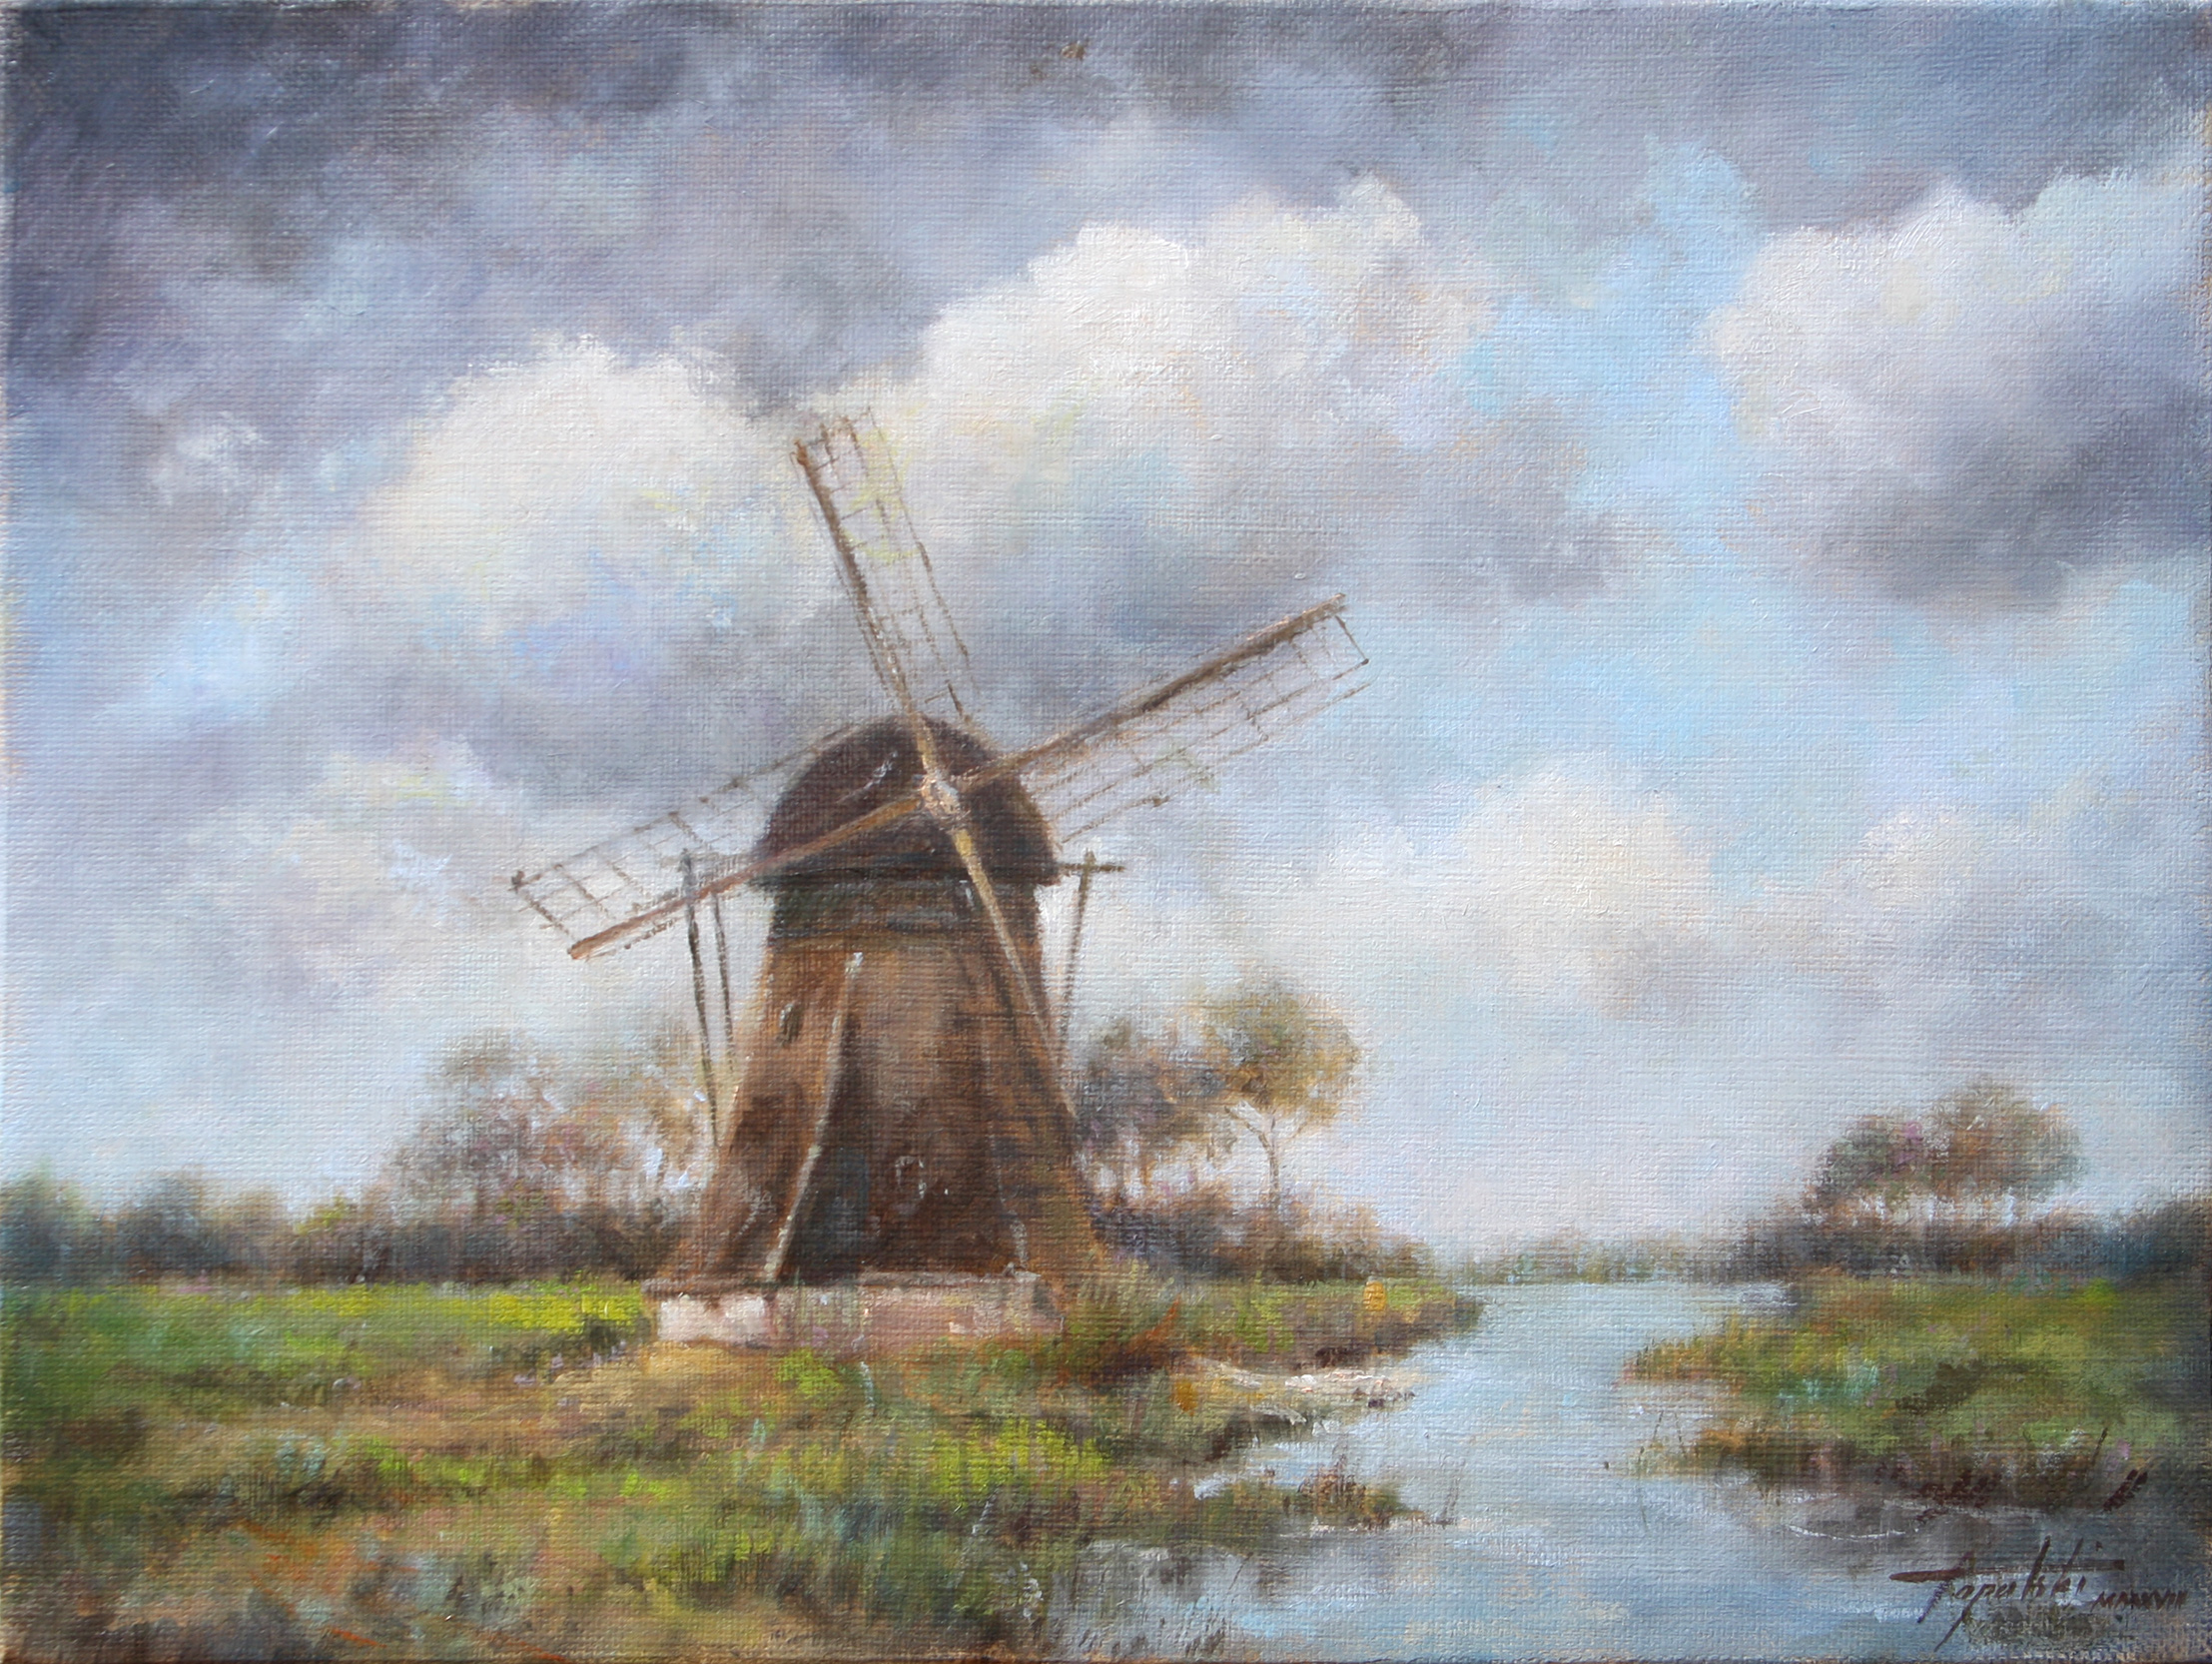 Windmill – Landscape Oil painting | Fine Arts Gallery - Original ...